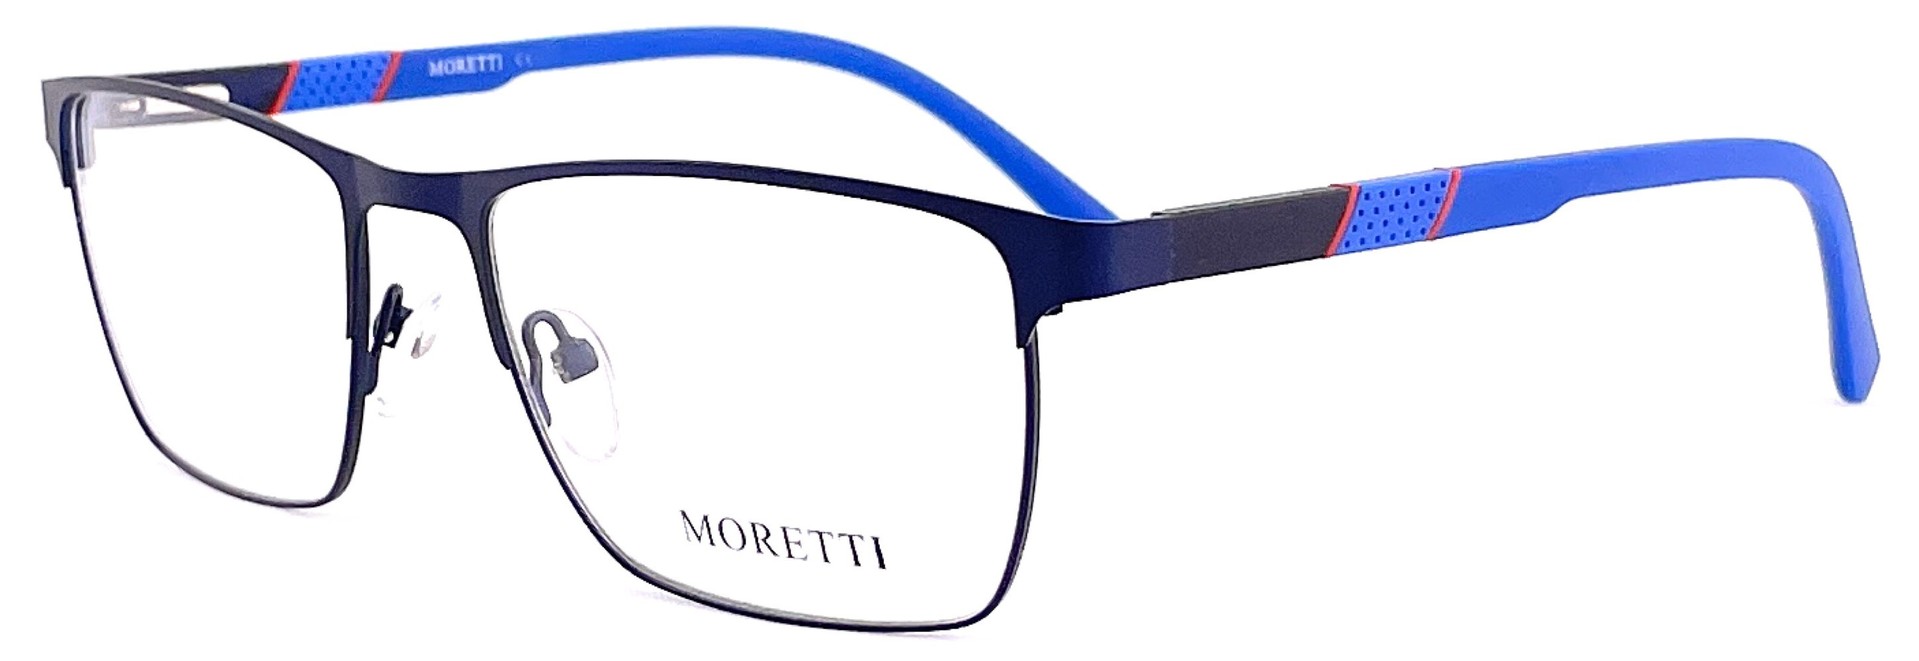 Moretti HC07-14 C6A 2